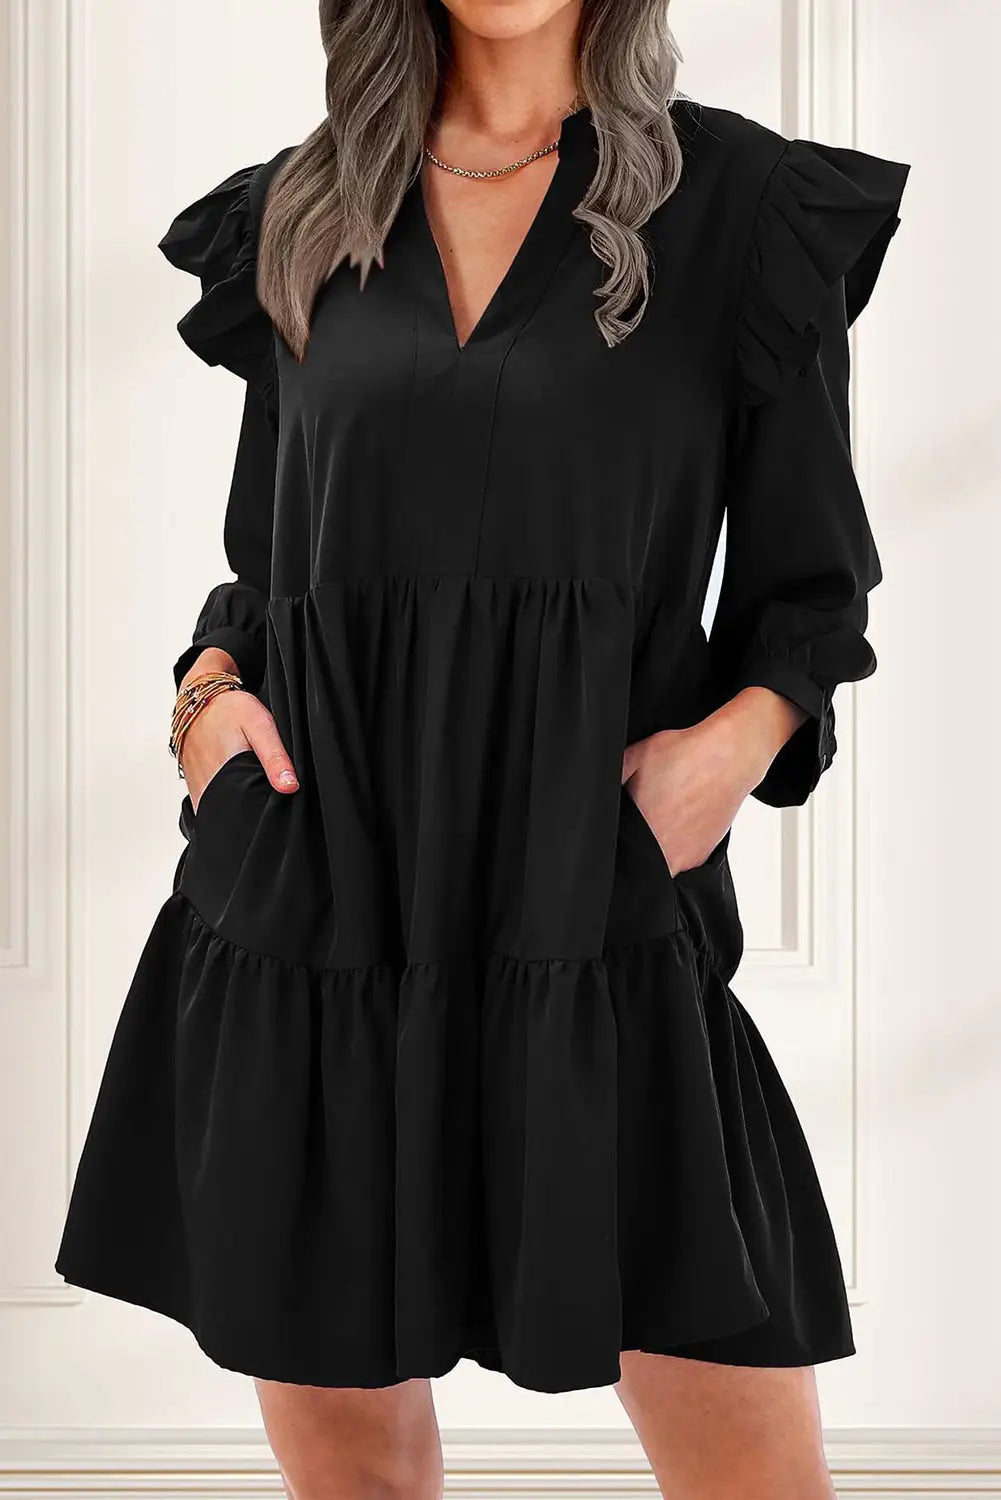 Black v neck tiered ruffled dress with pockets - l / 100% cotton - mini dresses